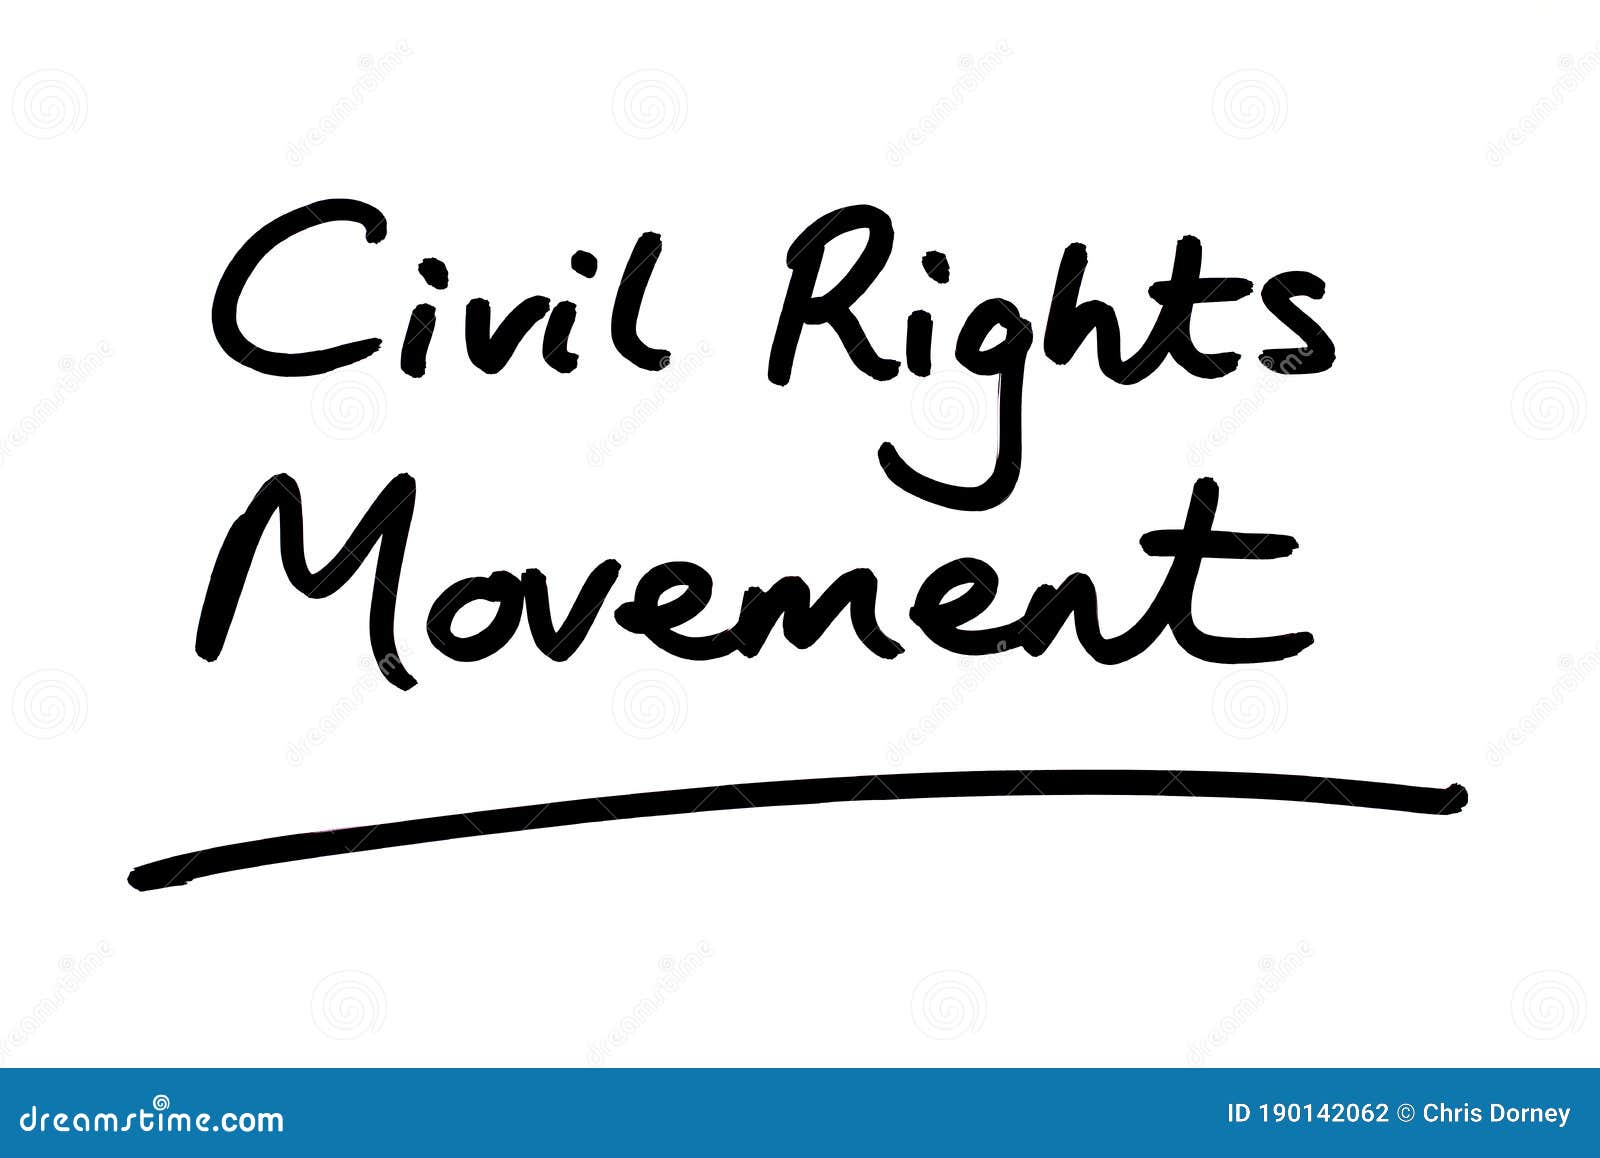 Civil Rights Movement stock illustration. Illustration of equality -  190142062